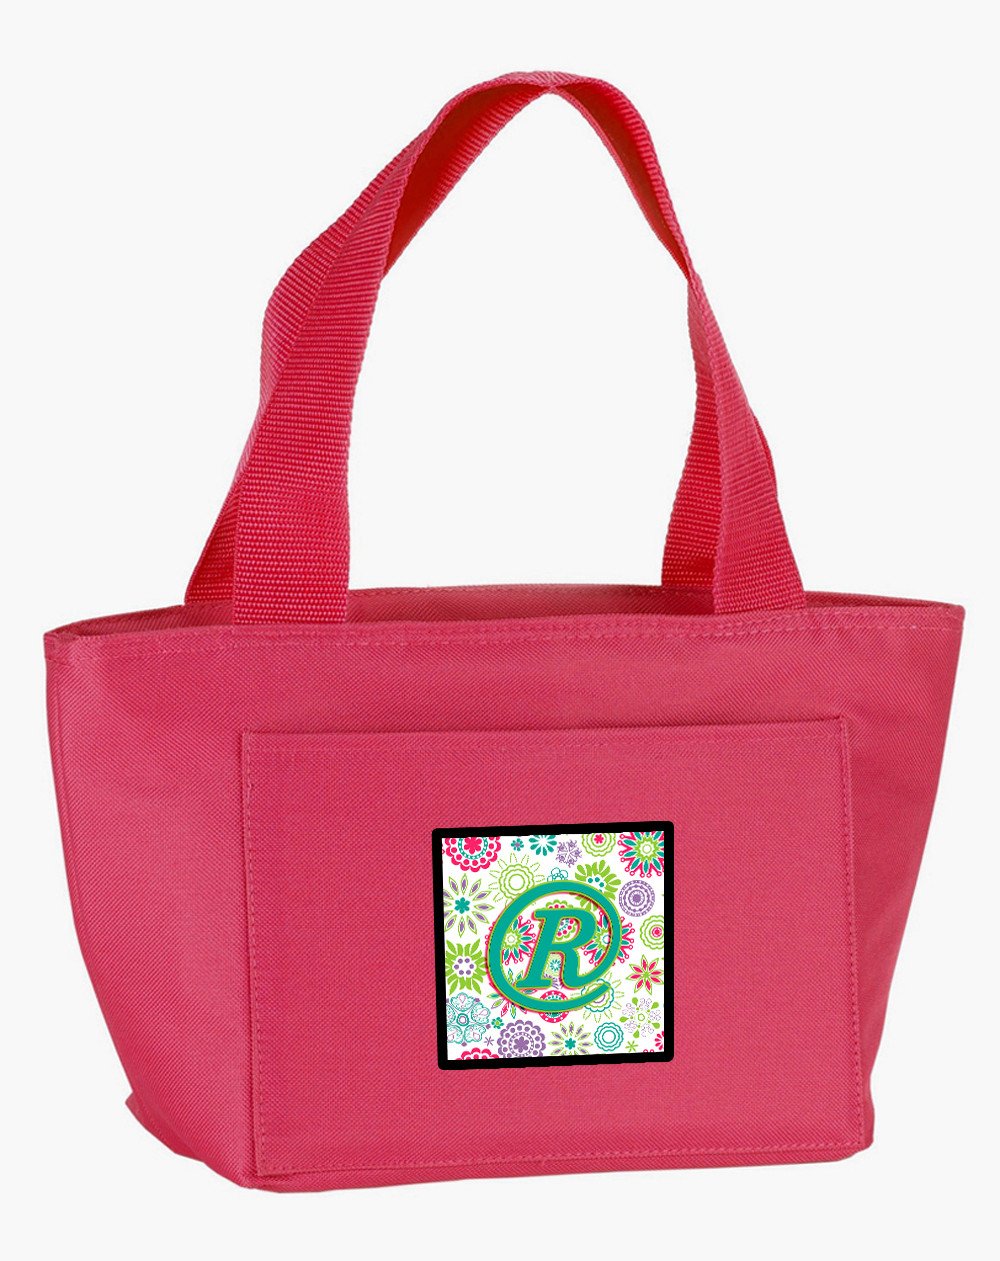 Letter R Flowers Pink Teal Green Initial Lunch Bag CJ2011-RPK-8808 by Caroline's Treasures